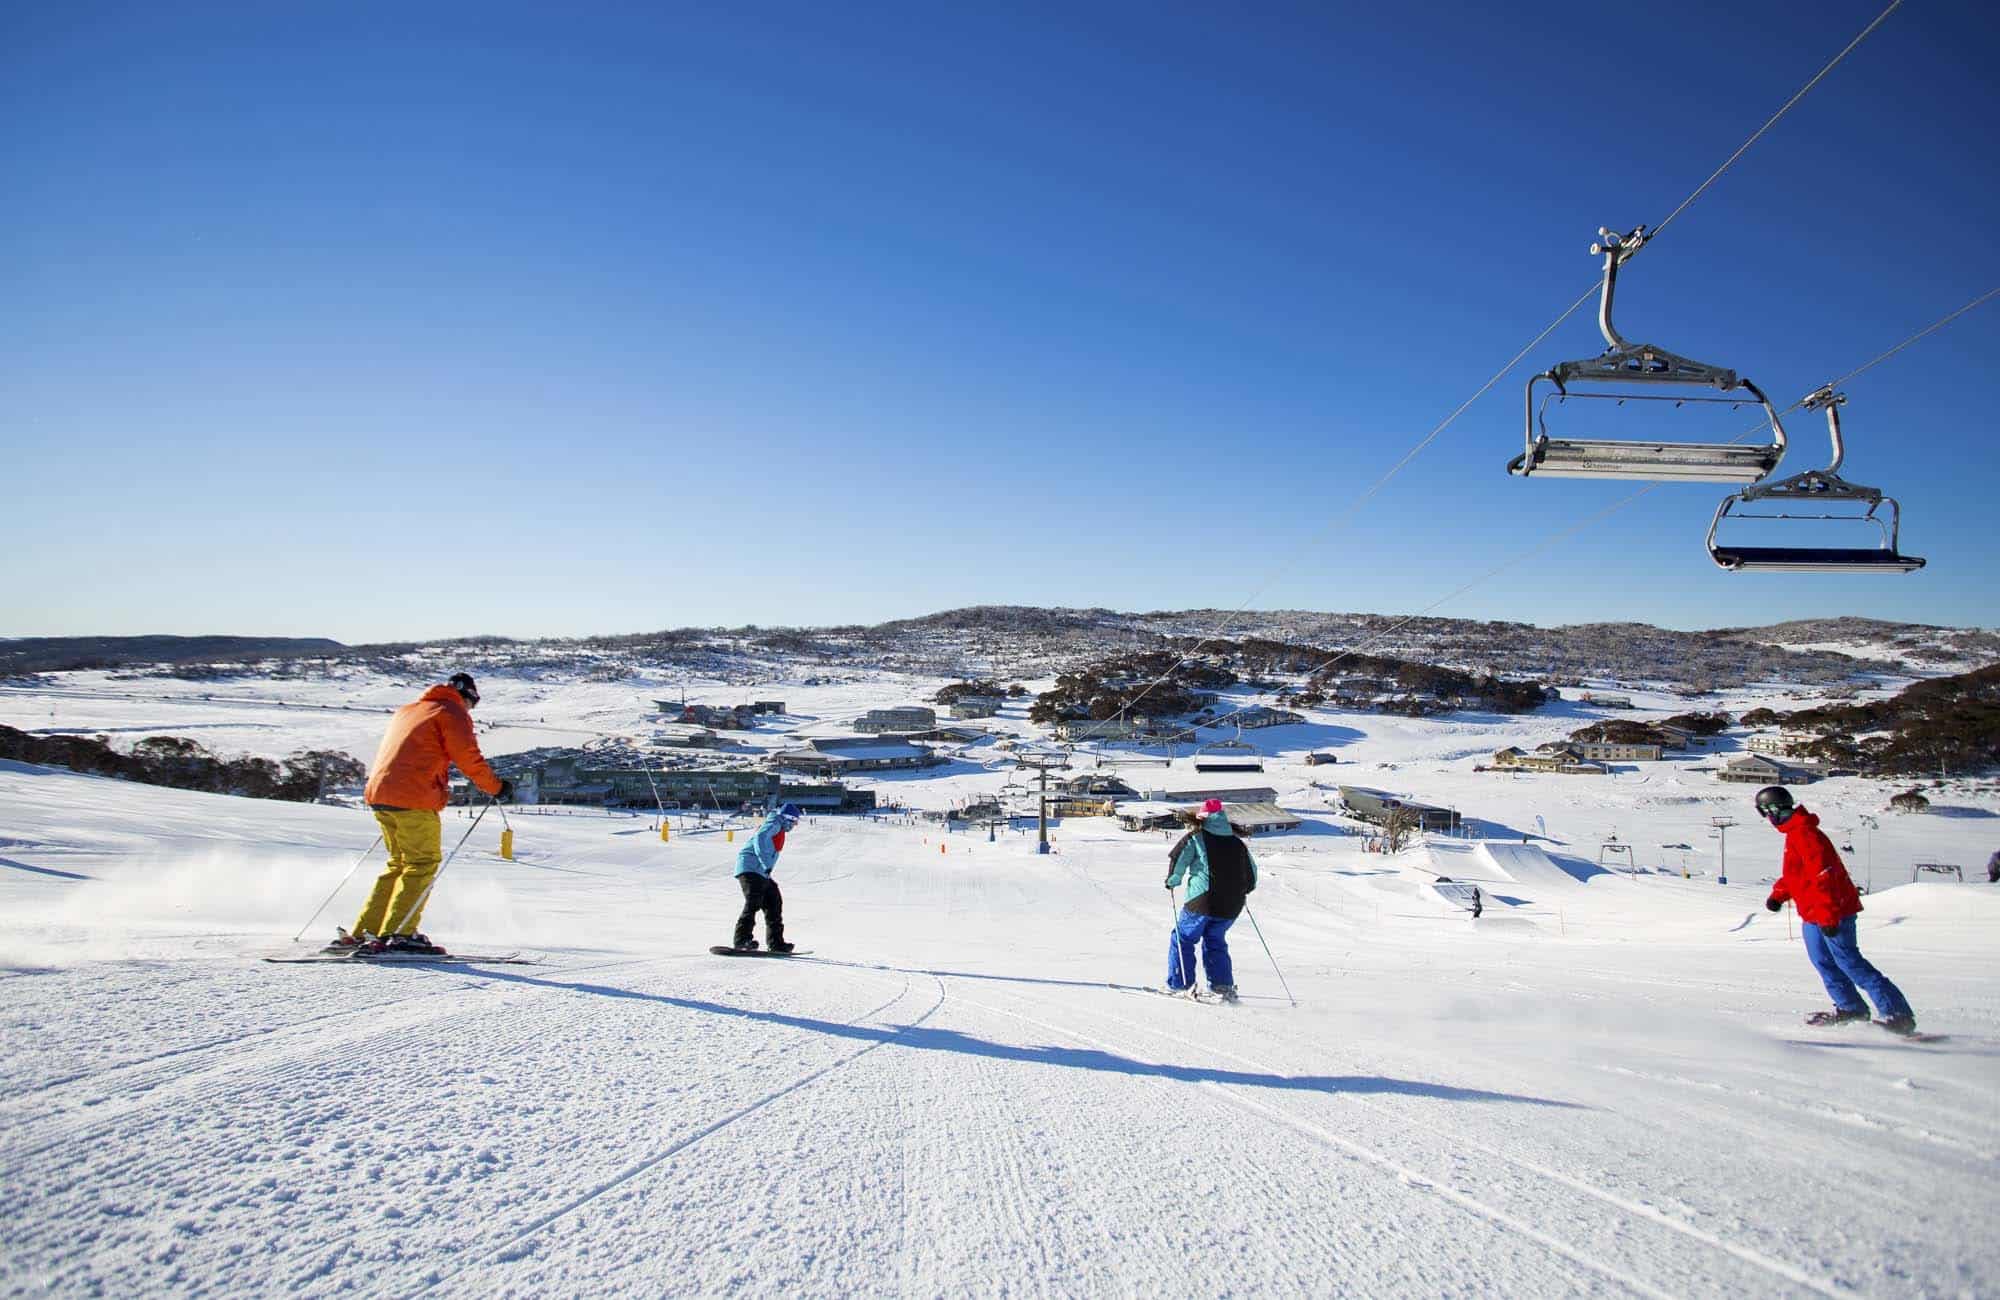 Four person skiing in snow in australia